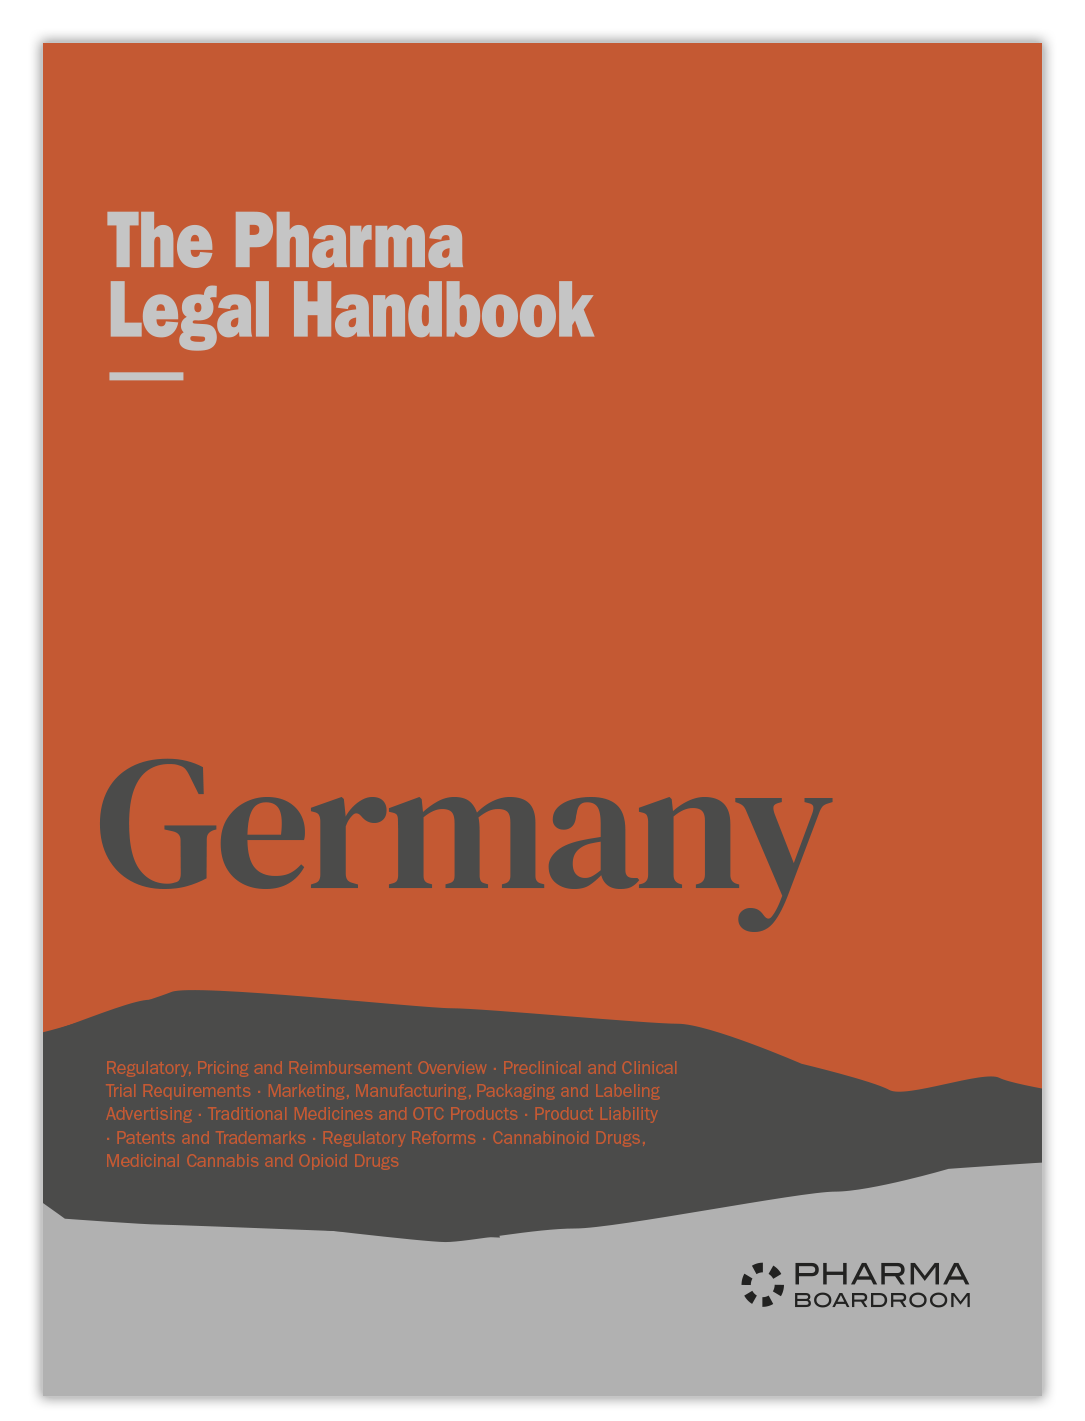 The Pharma Legal Handbook: Germany